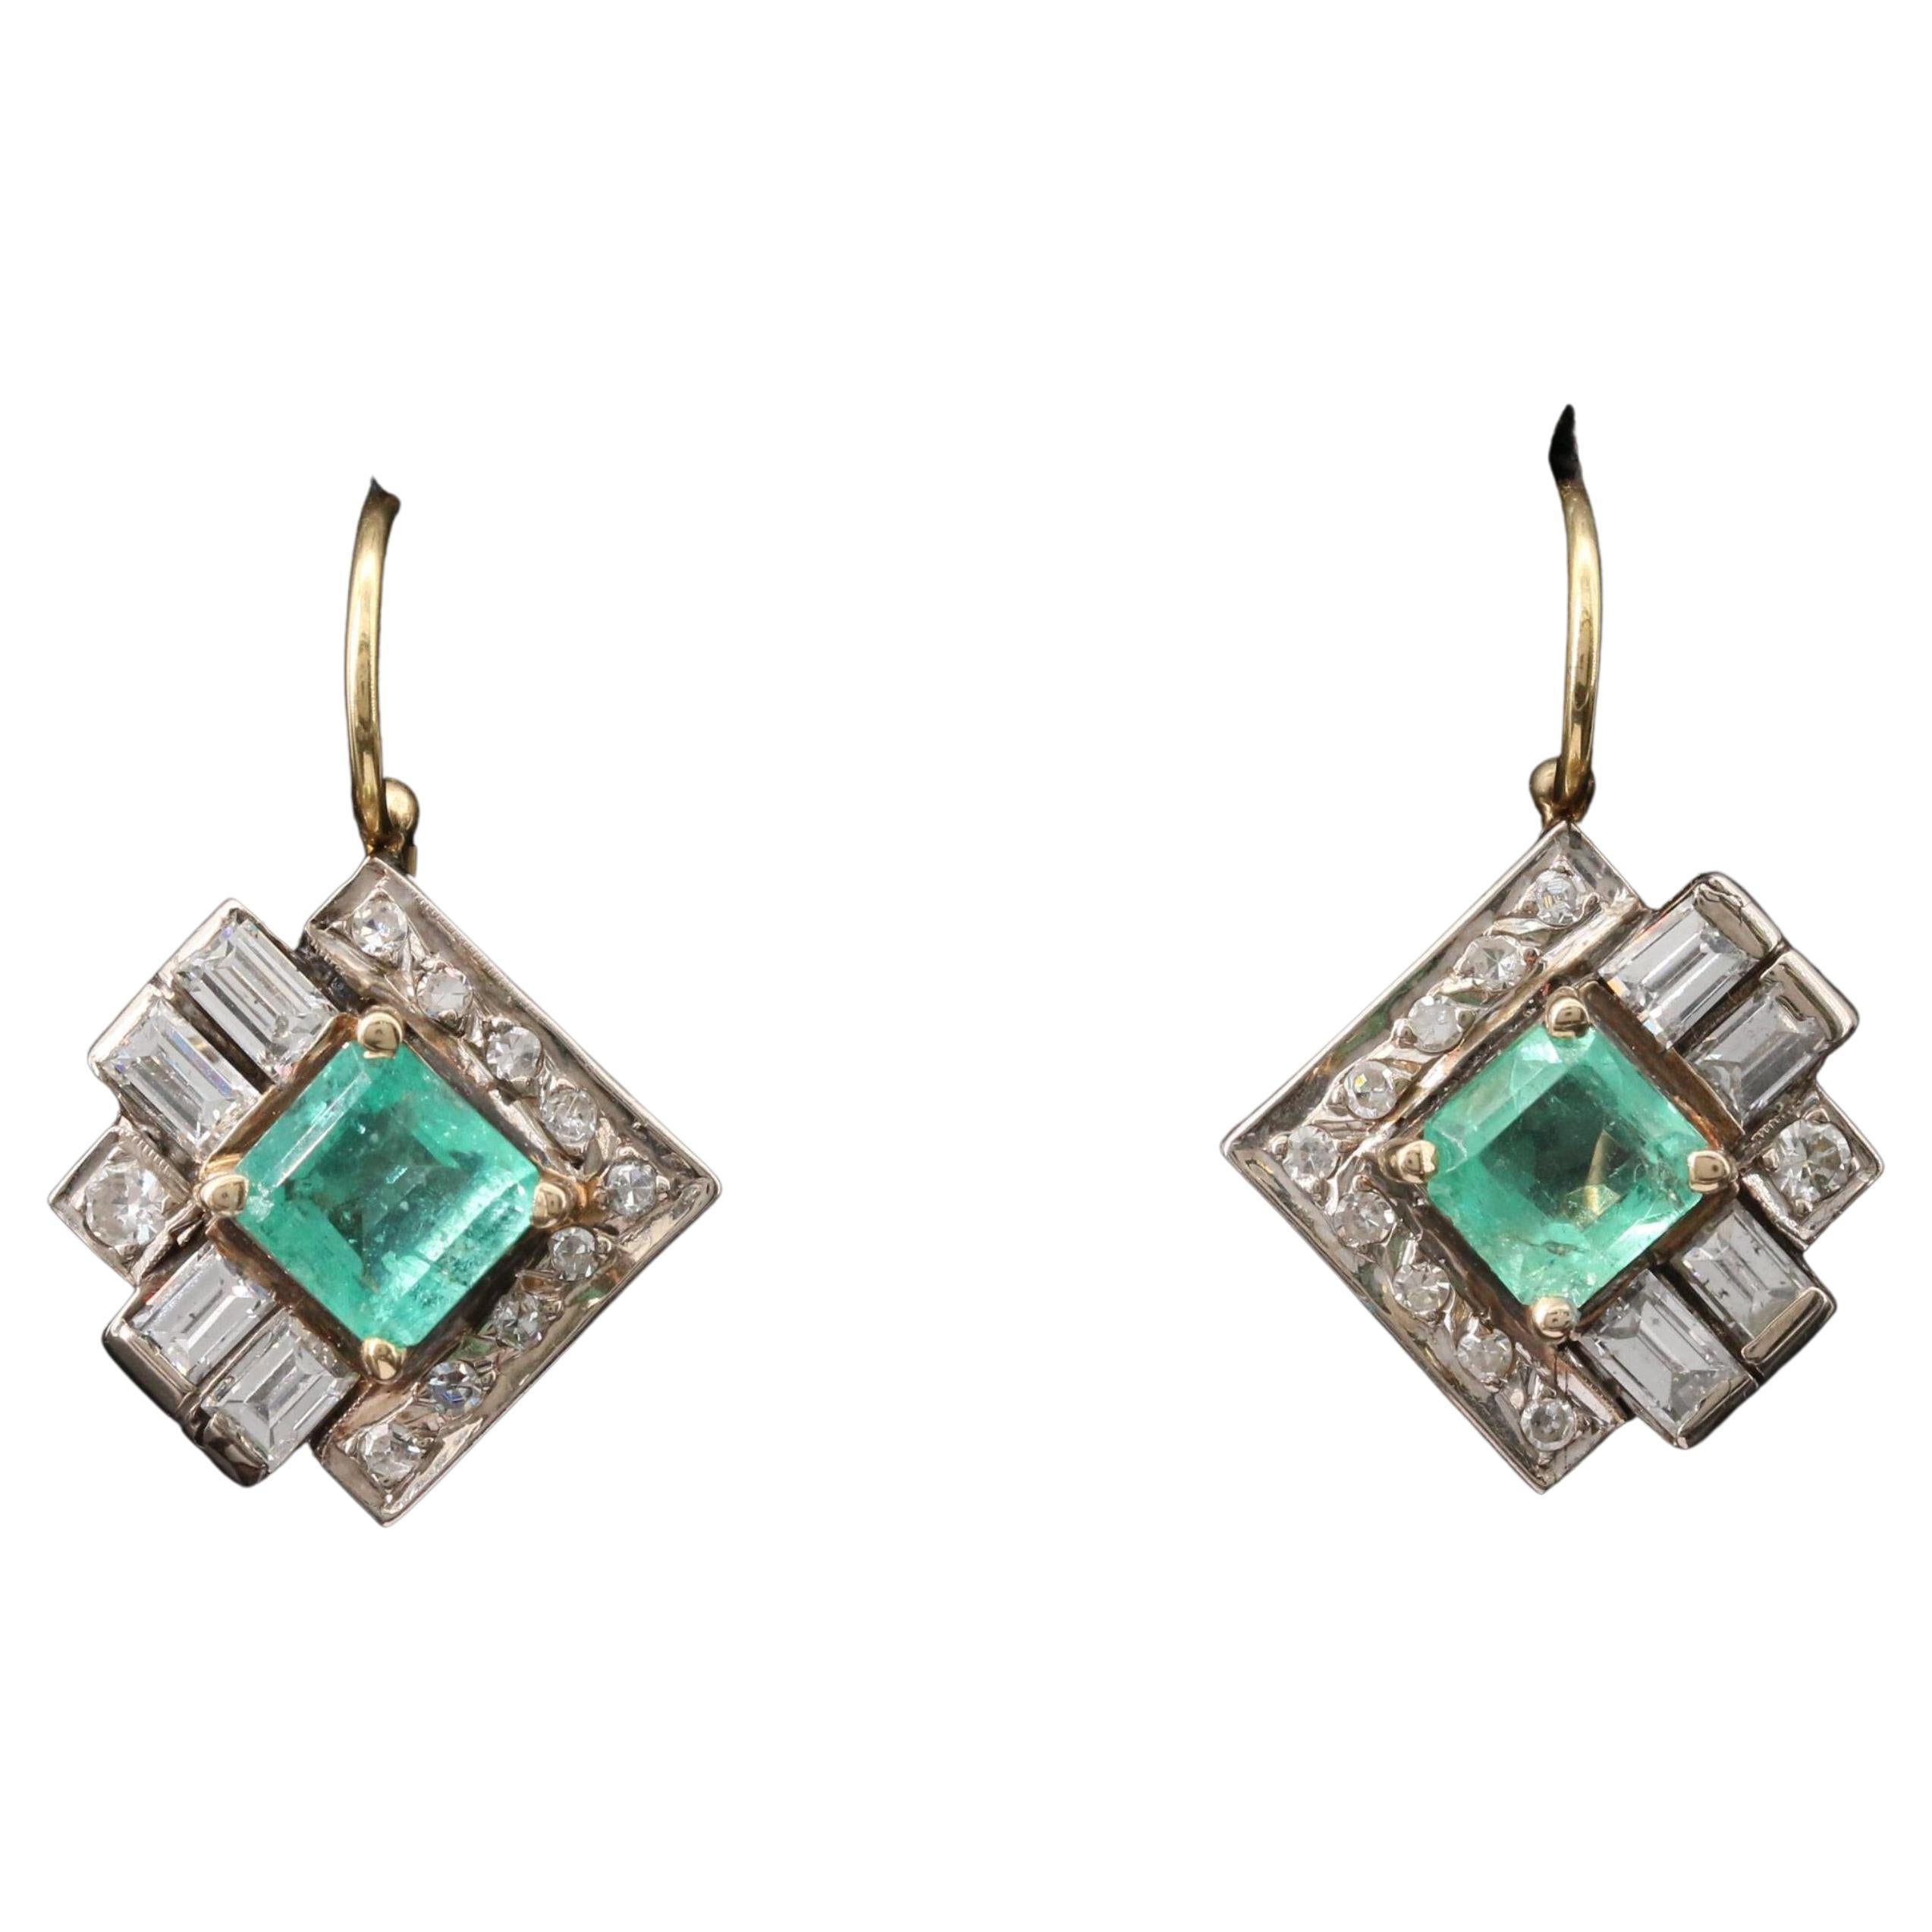 Antique Emerald Hoop Earrings, 18K Solid Gold Hoop Earrings with Drop Emerald For Sale